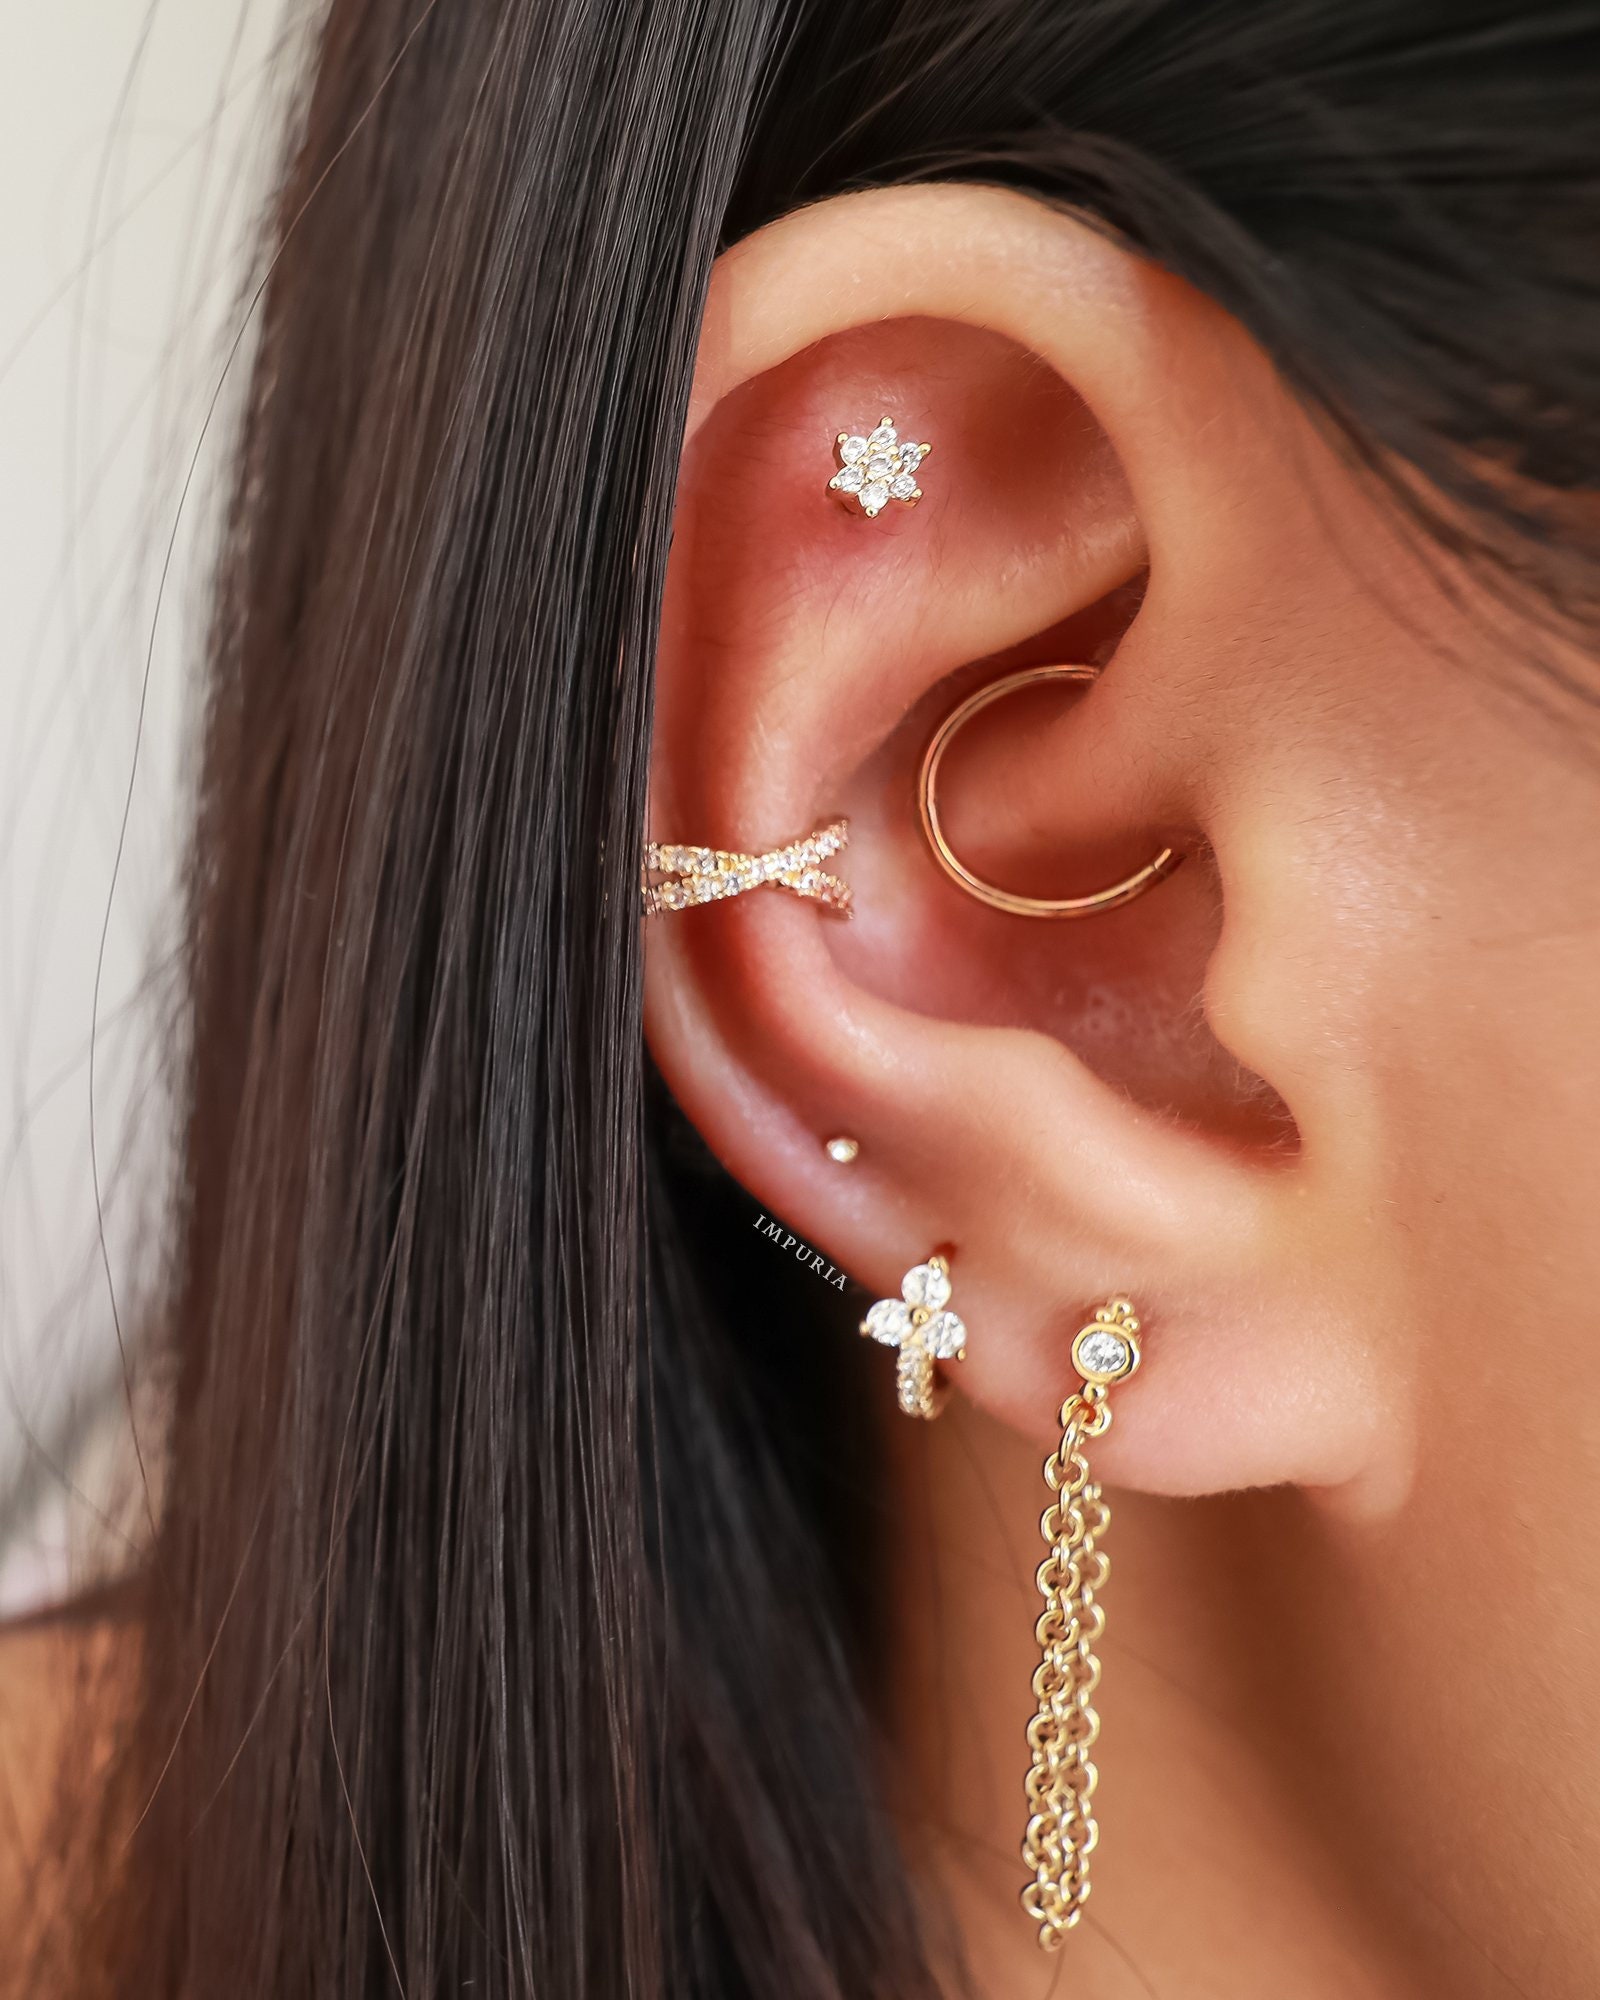 Flower Helix Earring Cartilage Stud Gold Tragus Piercing | Etsy